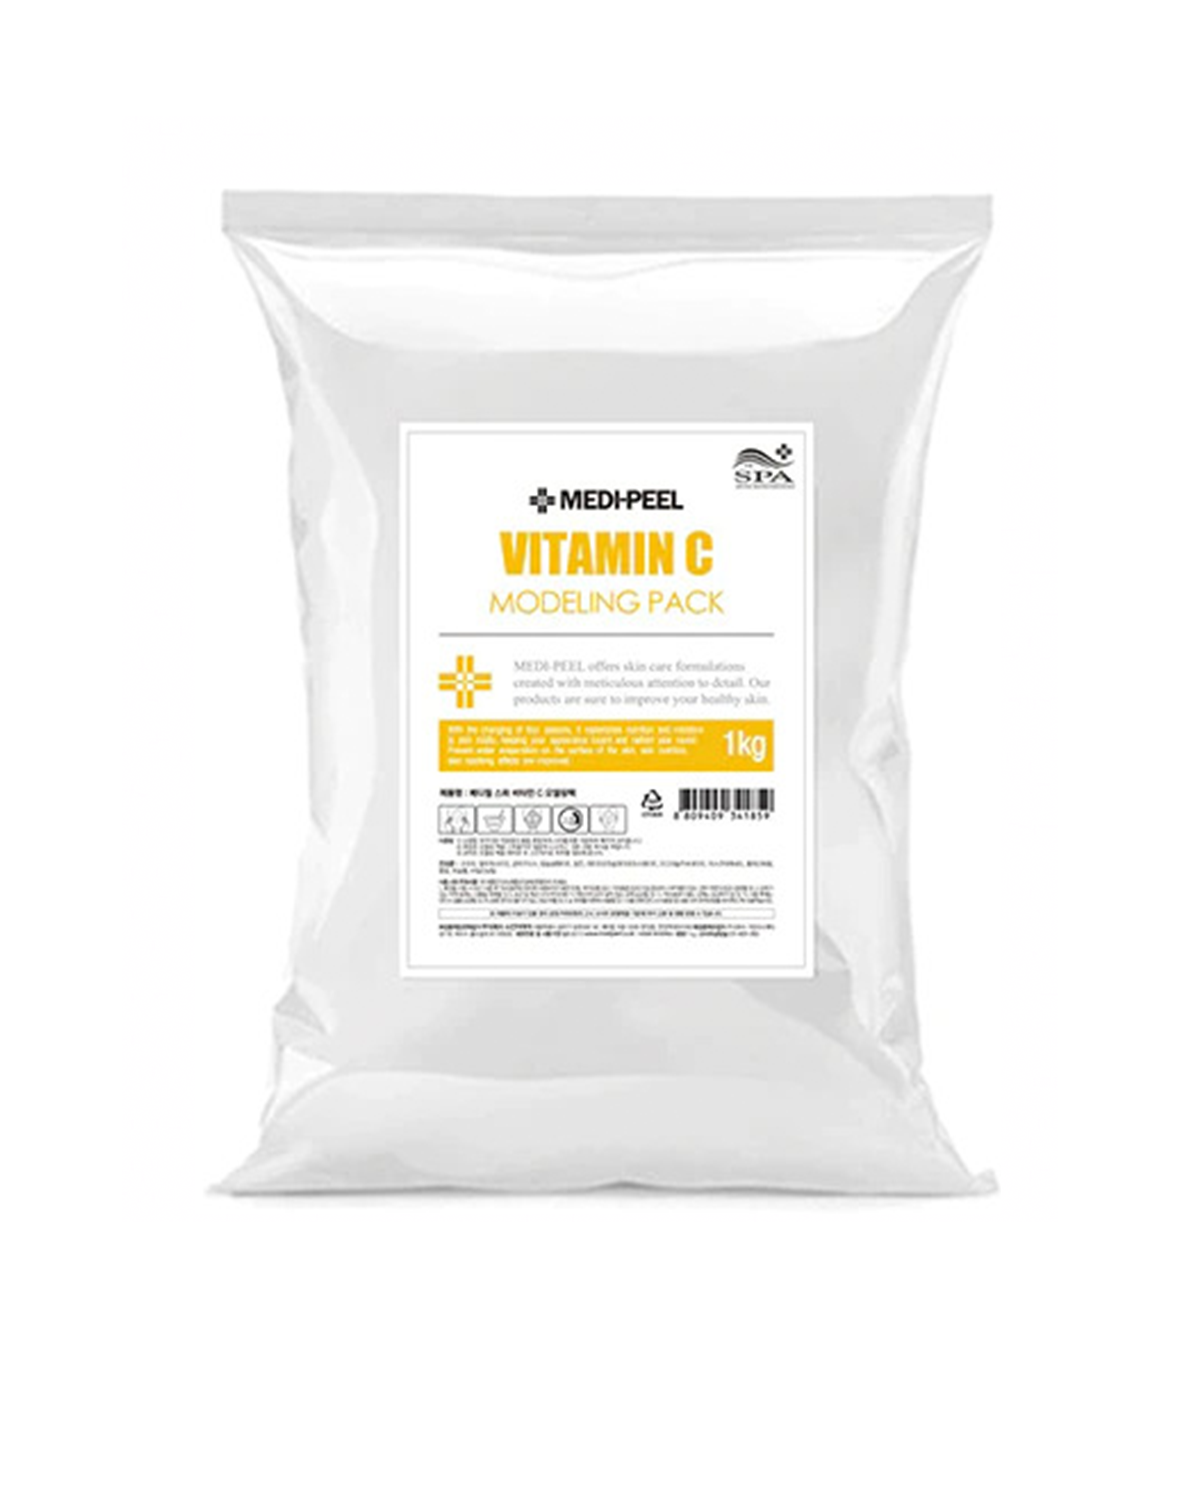 MEDI-PEEL Vitamin C Modeling Pack 1 kg